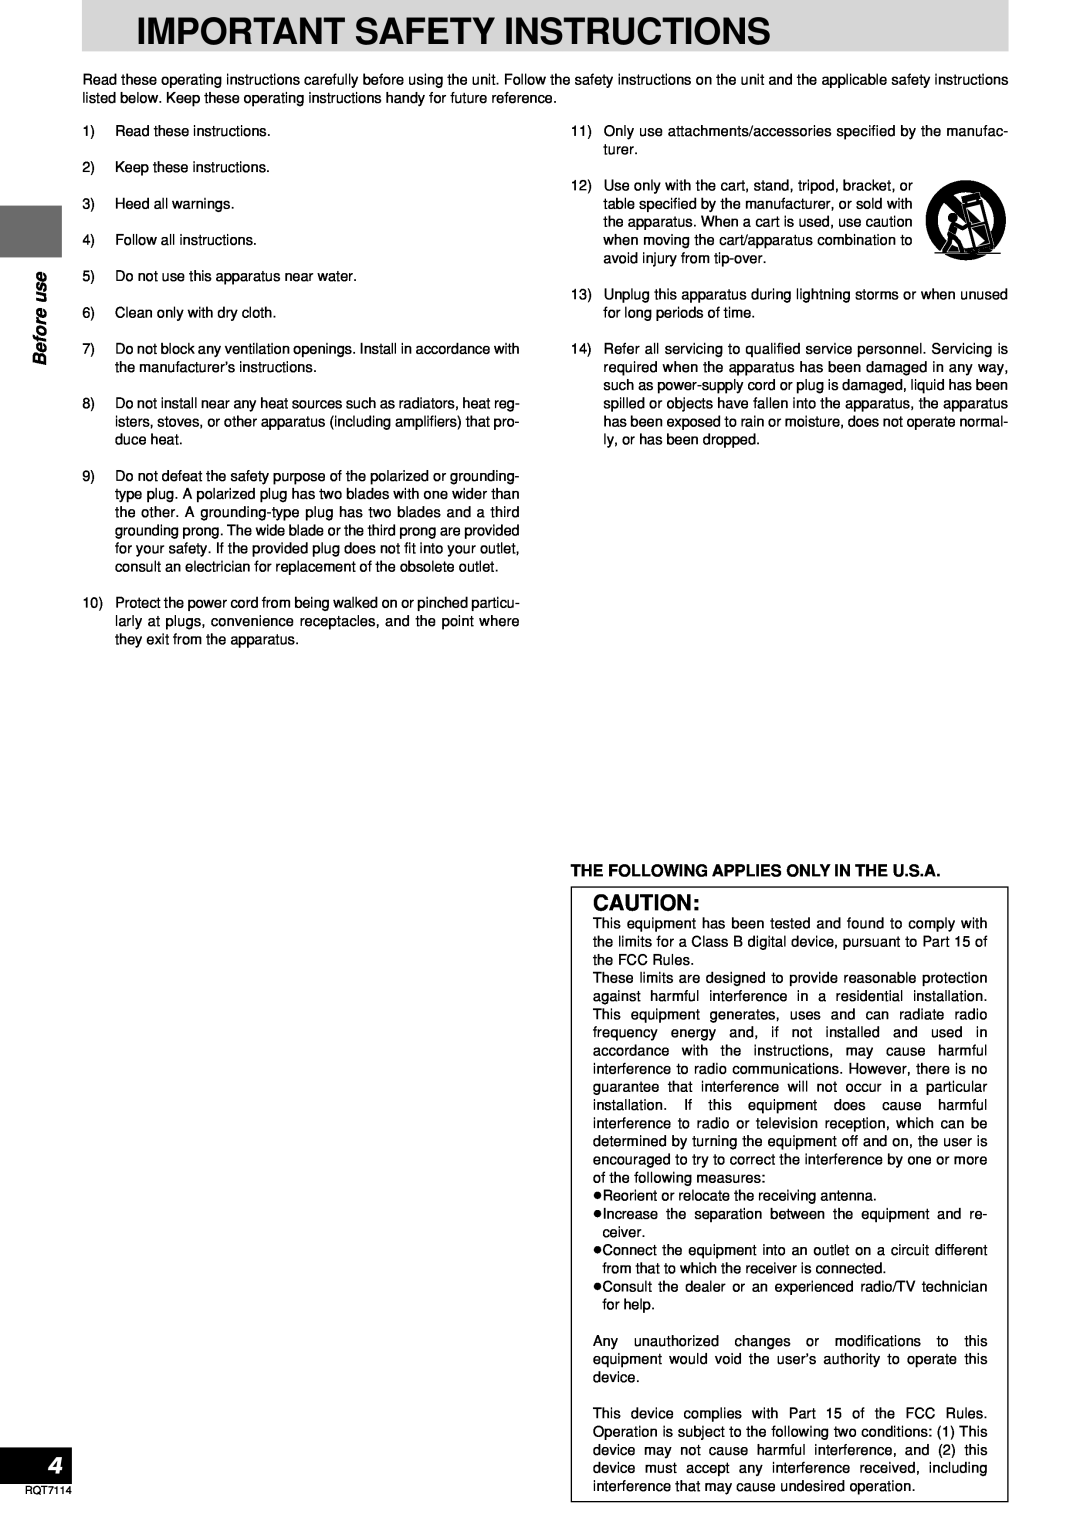 Panasonic SL-DZ1200 manual Before use, Important Safety Instructions 